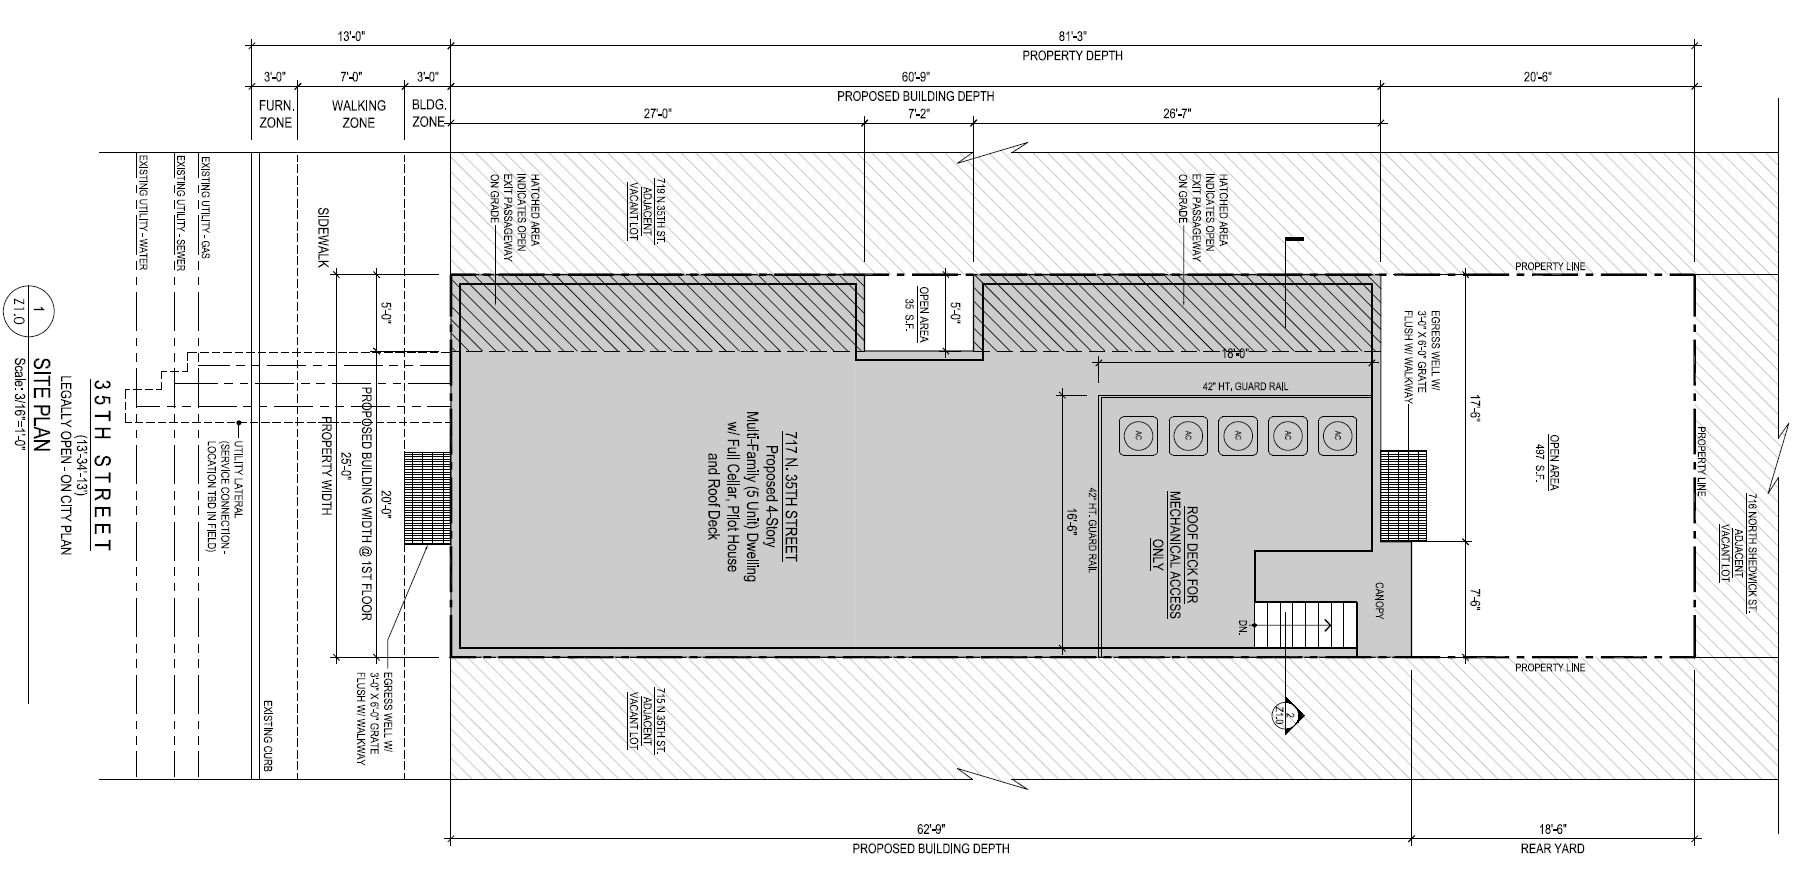 717 North 35th Street. Site plan. Credit: 24 Seven Design Group via the City of Philadelphia